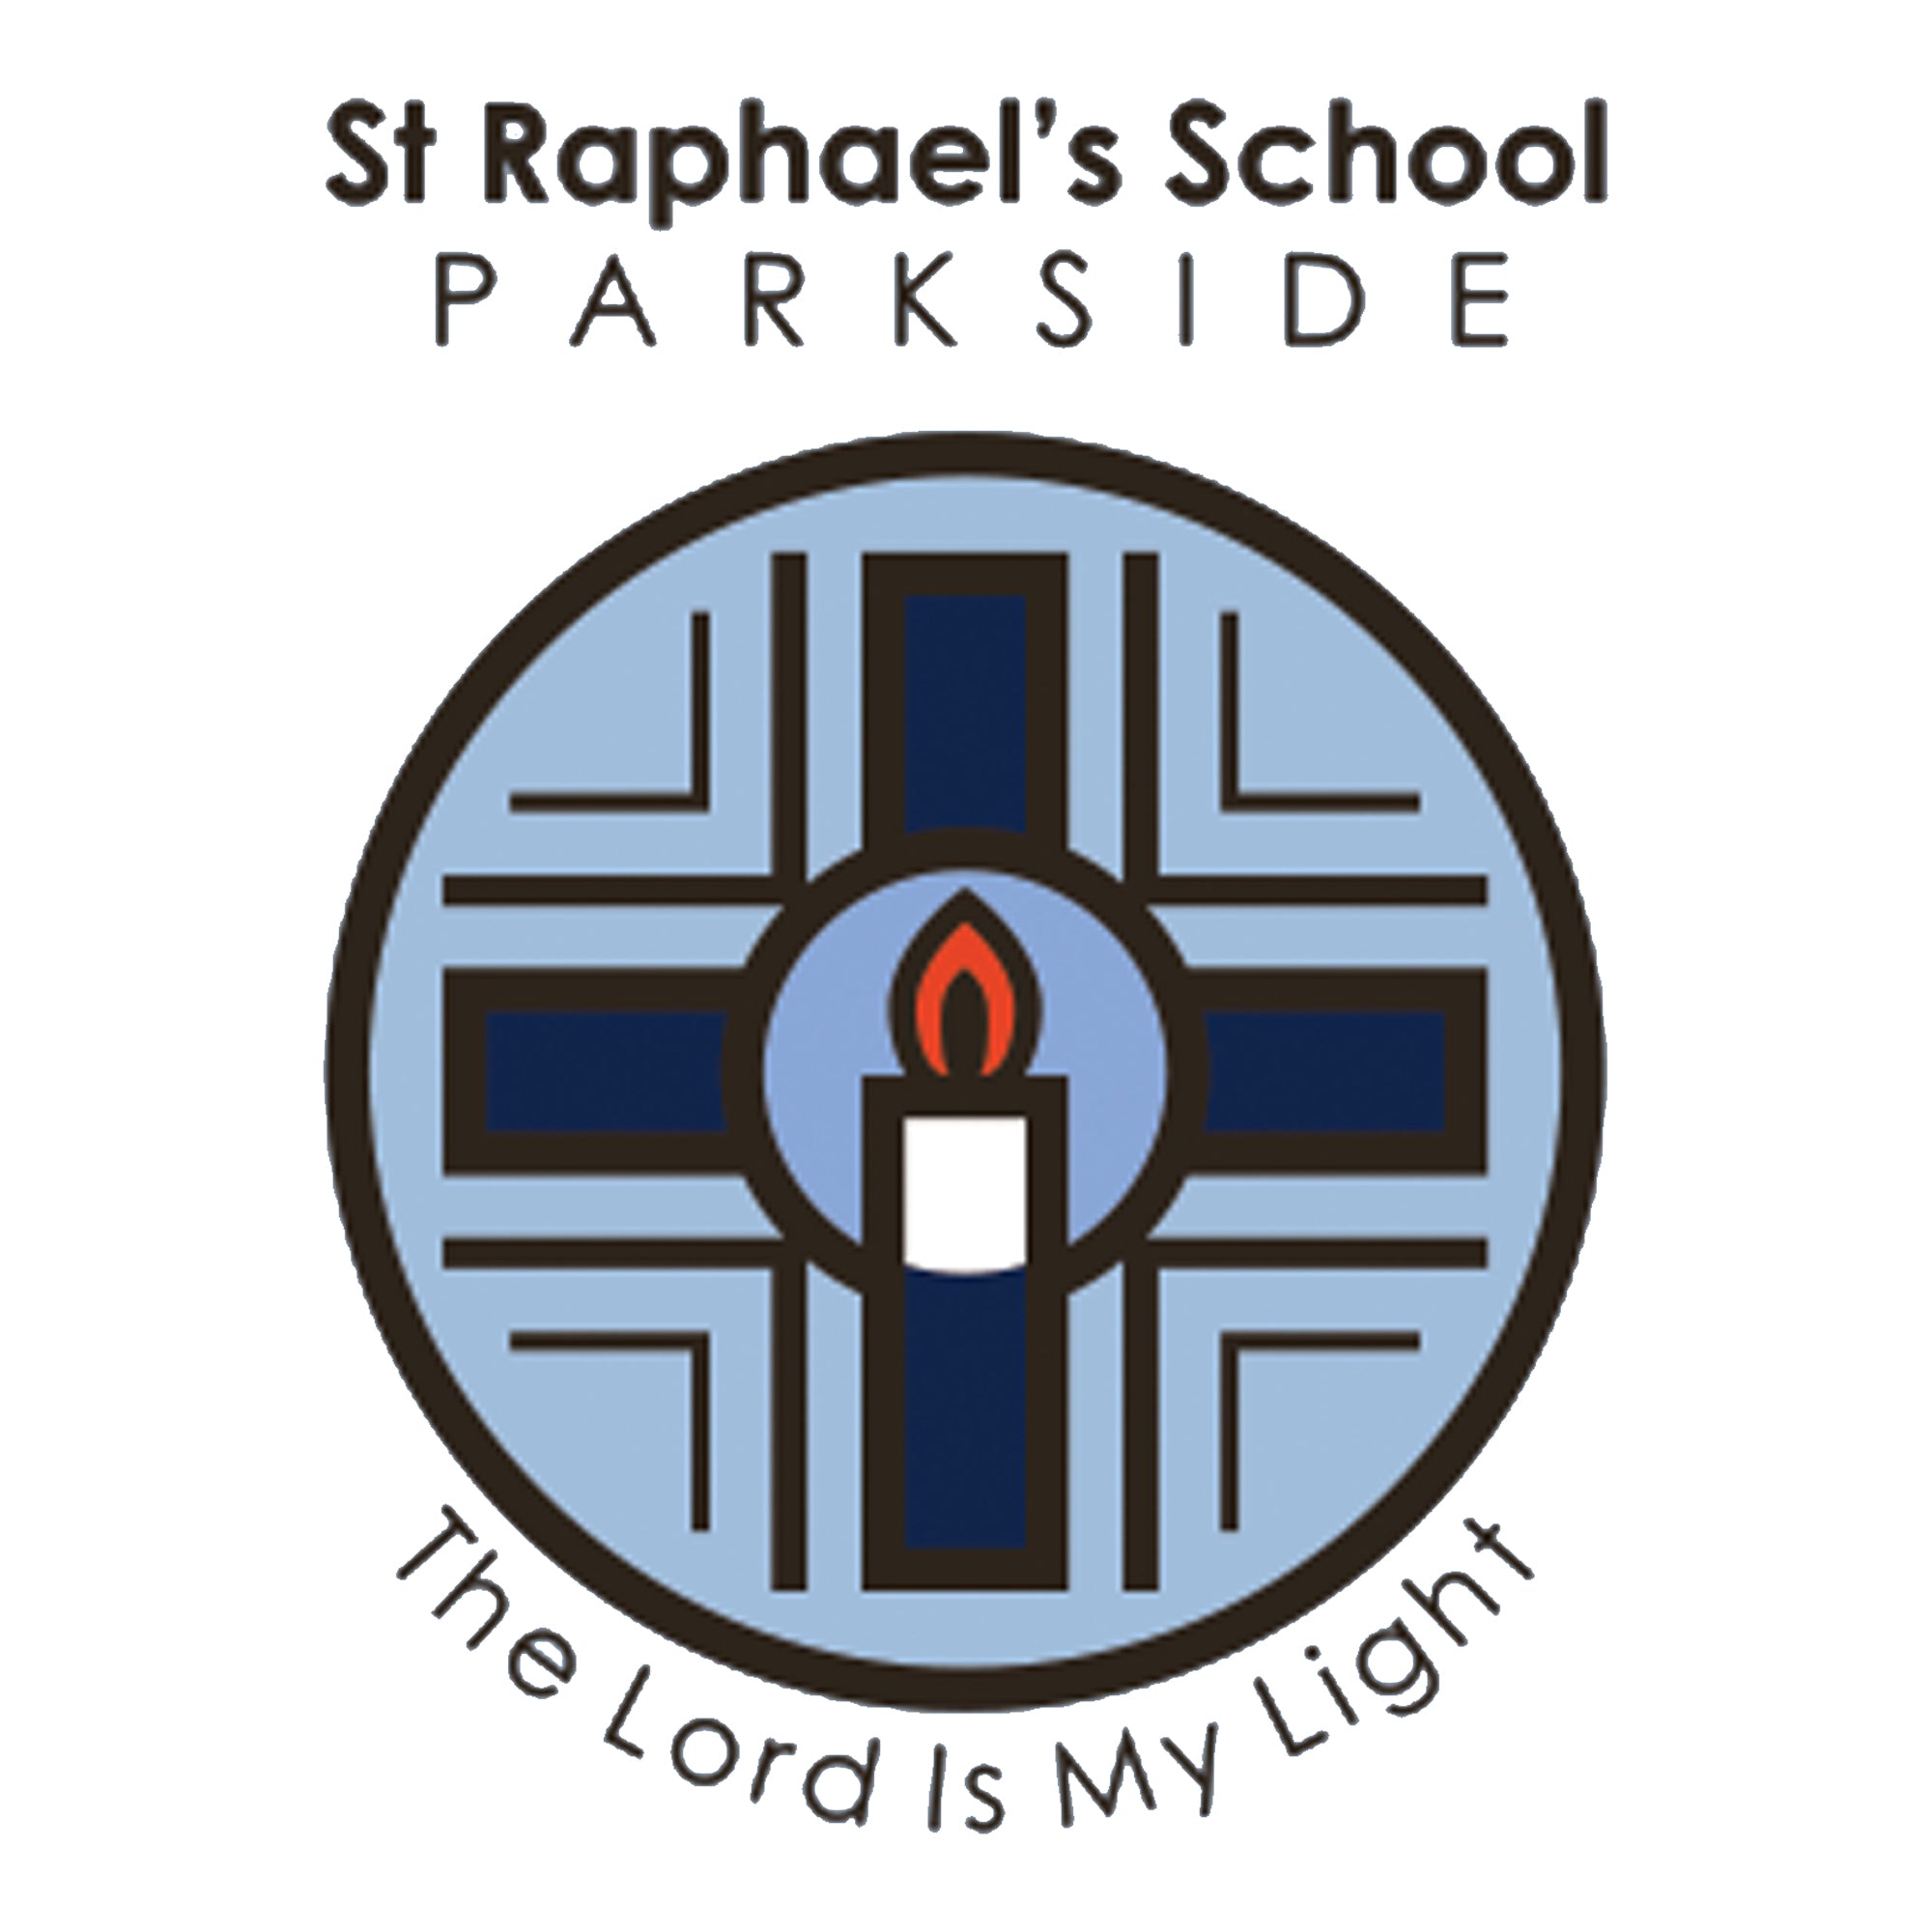 St Raphael's School